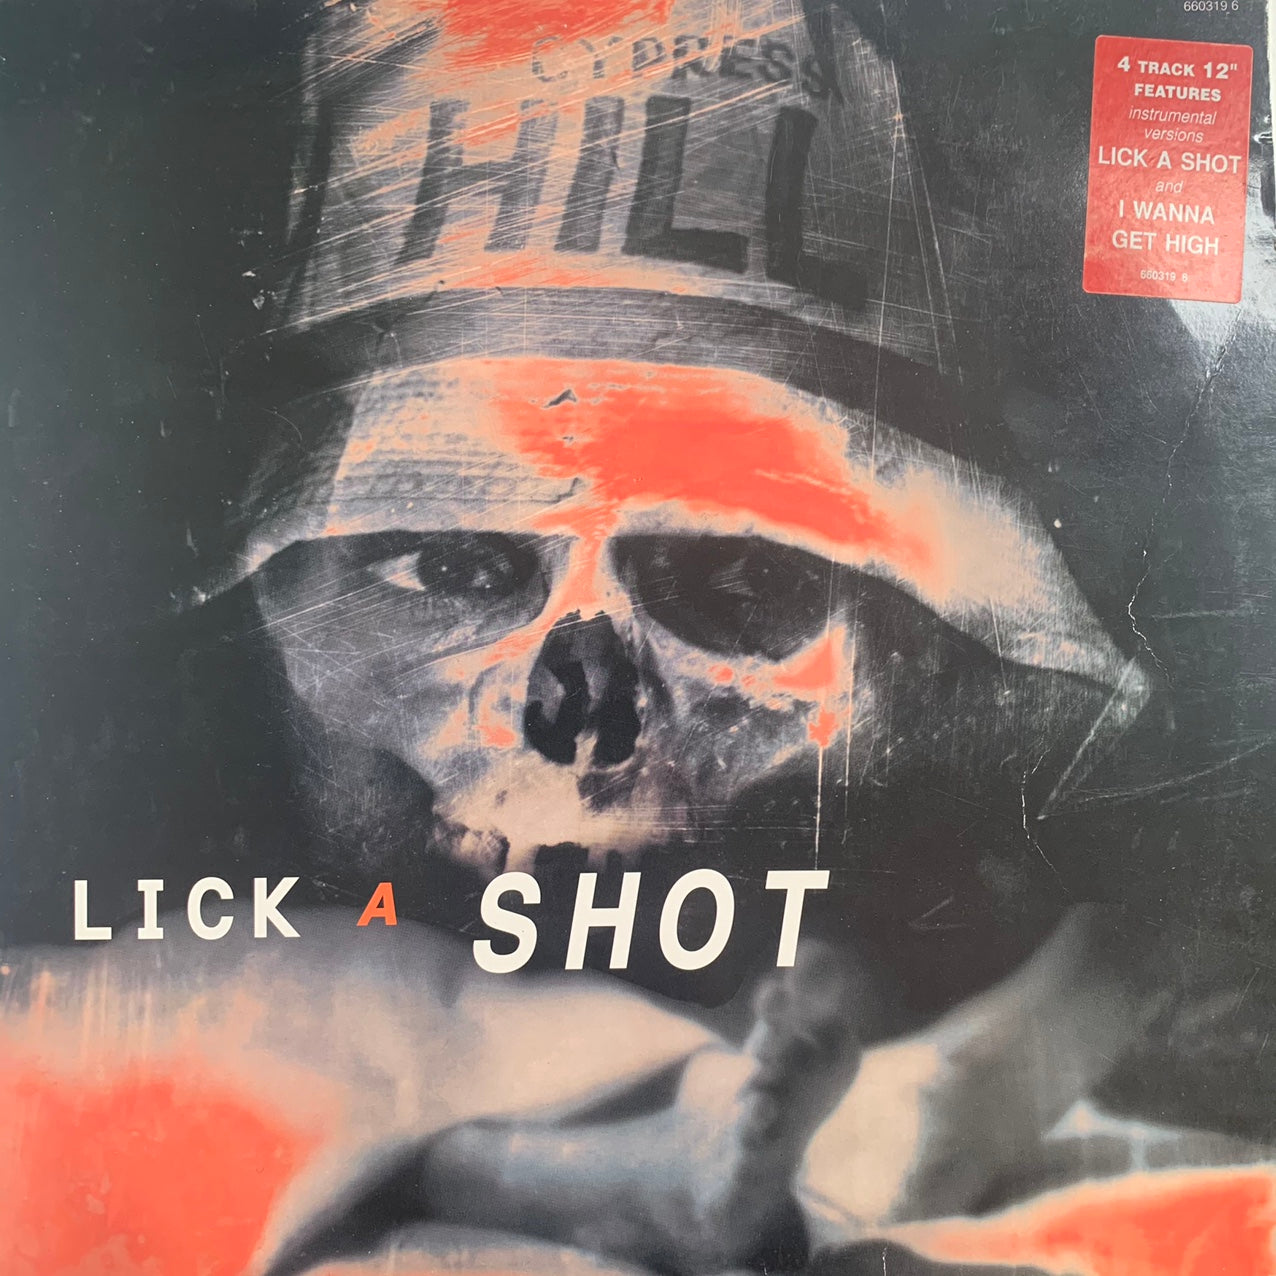 Cypress Hill “Lick A Shot” / “Scooby Doo” / “I Wanna Get High” 4 Track 12inch Vinyl